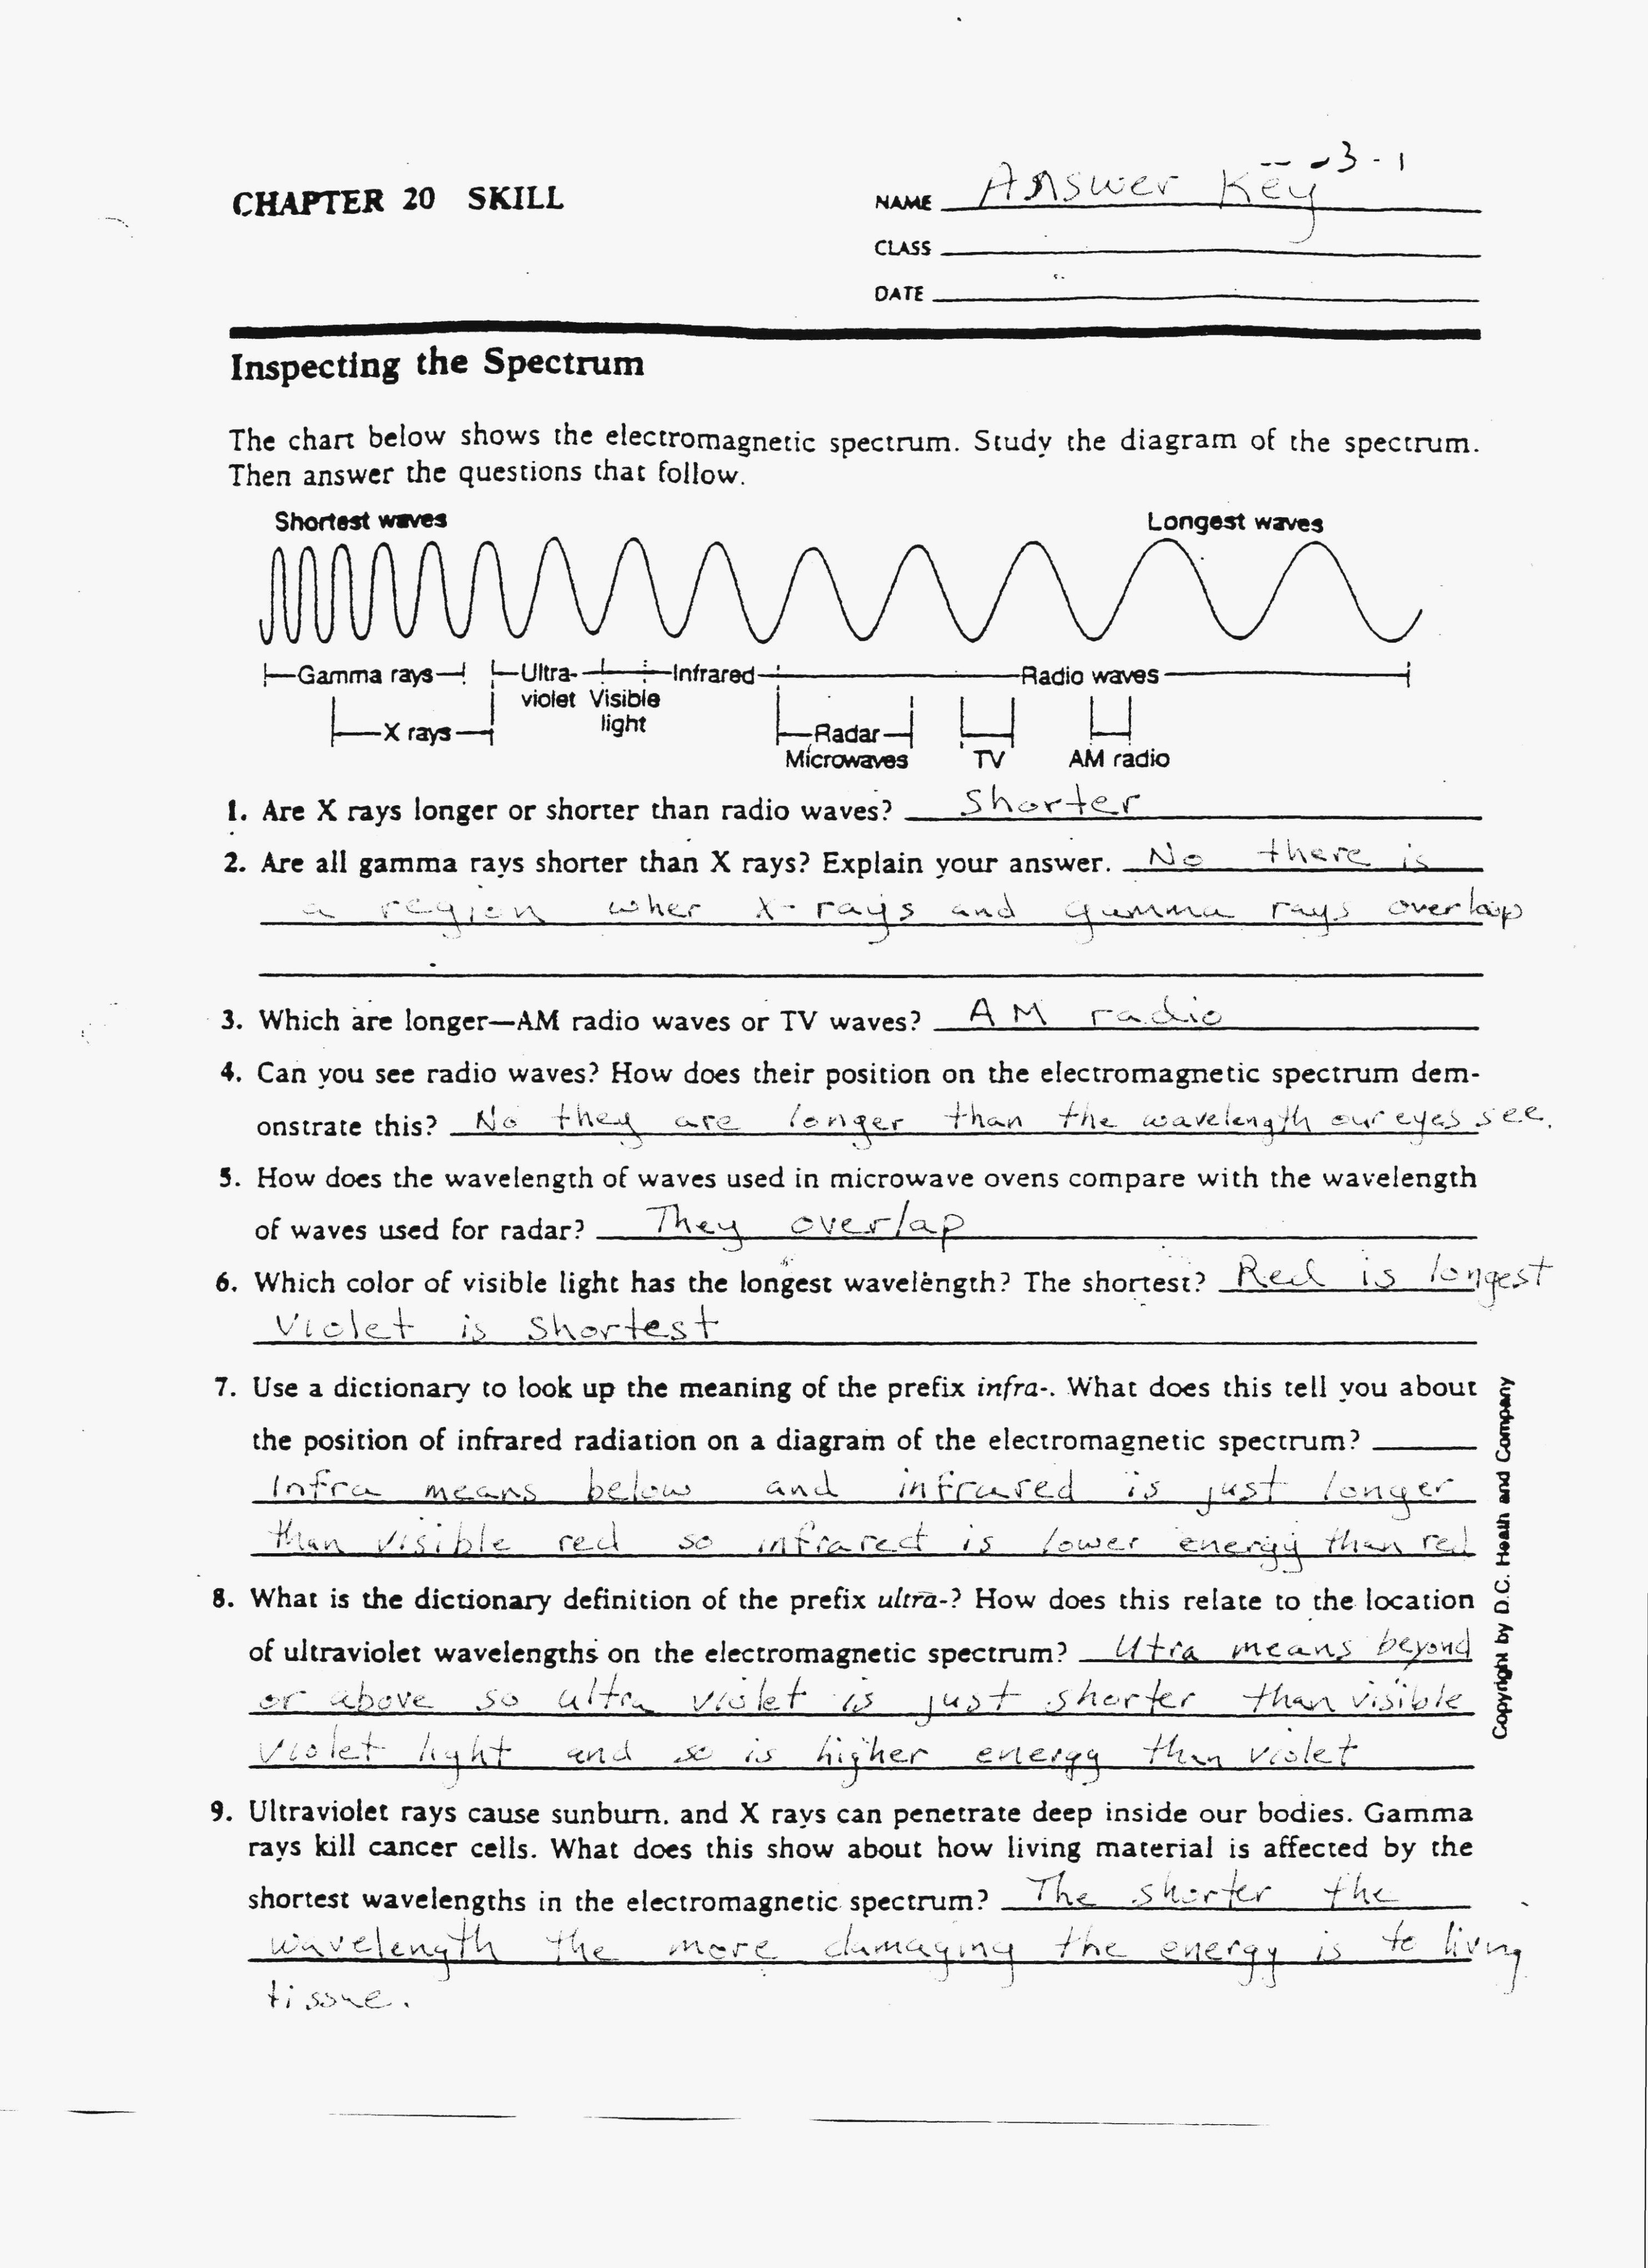 The Electromagnetic Spectrum Worksheet